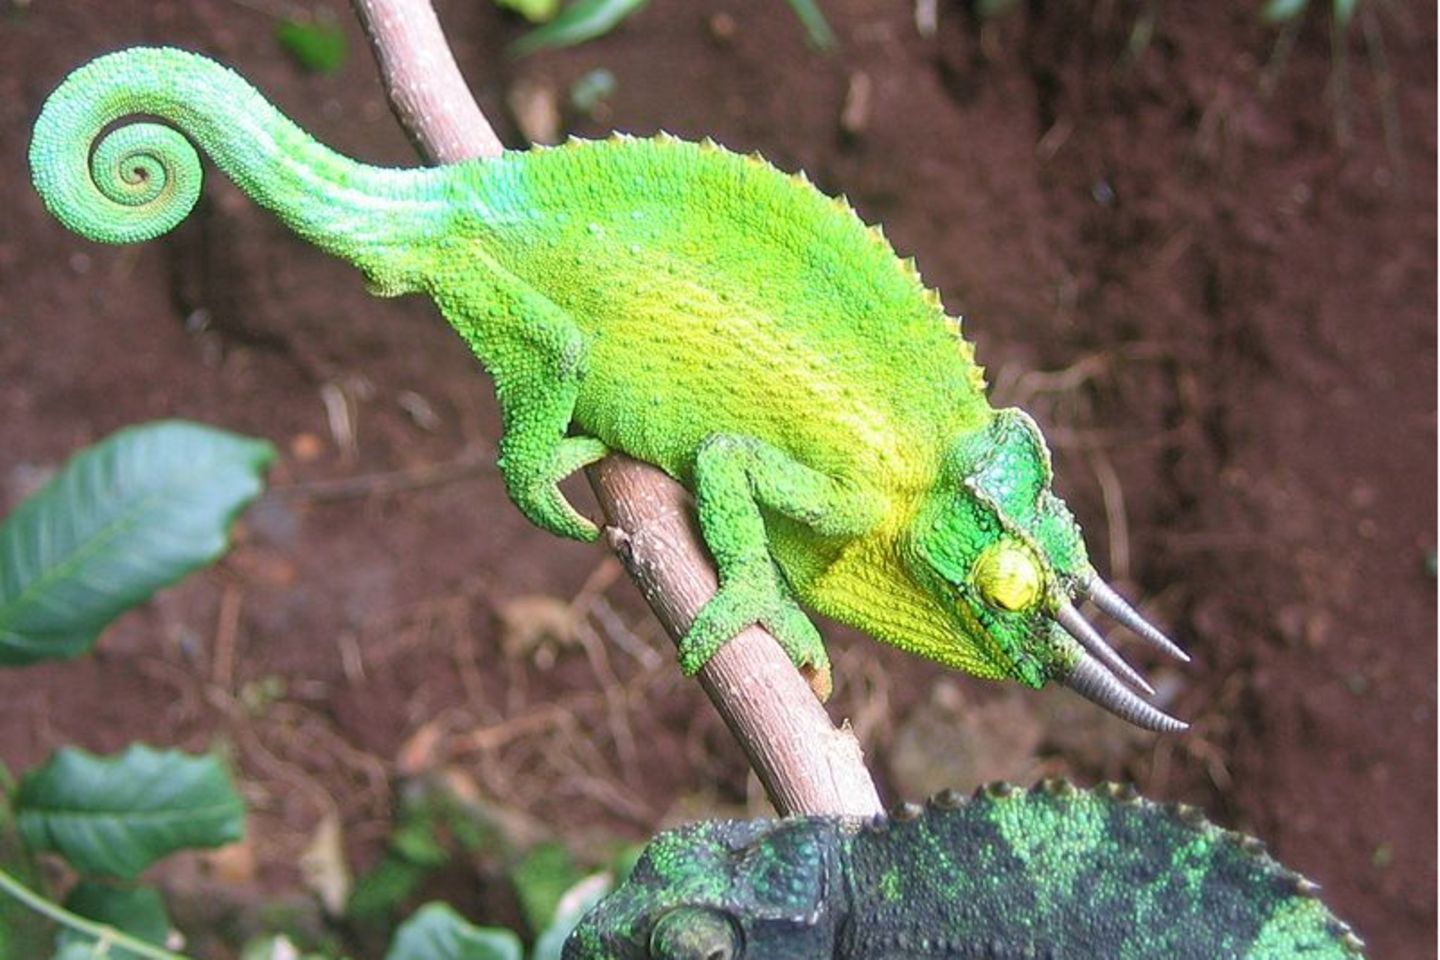 Three-horned chameleon in Hawaii